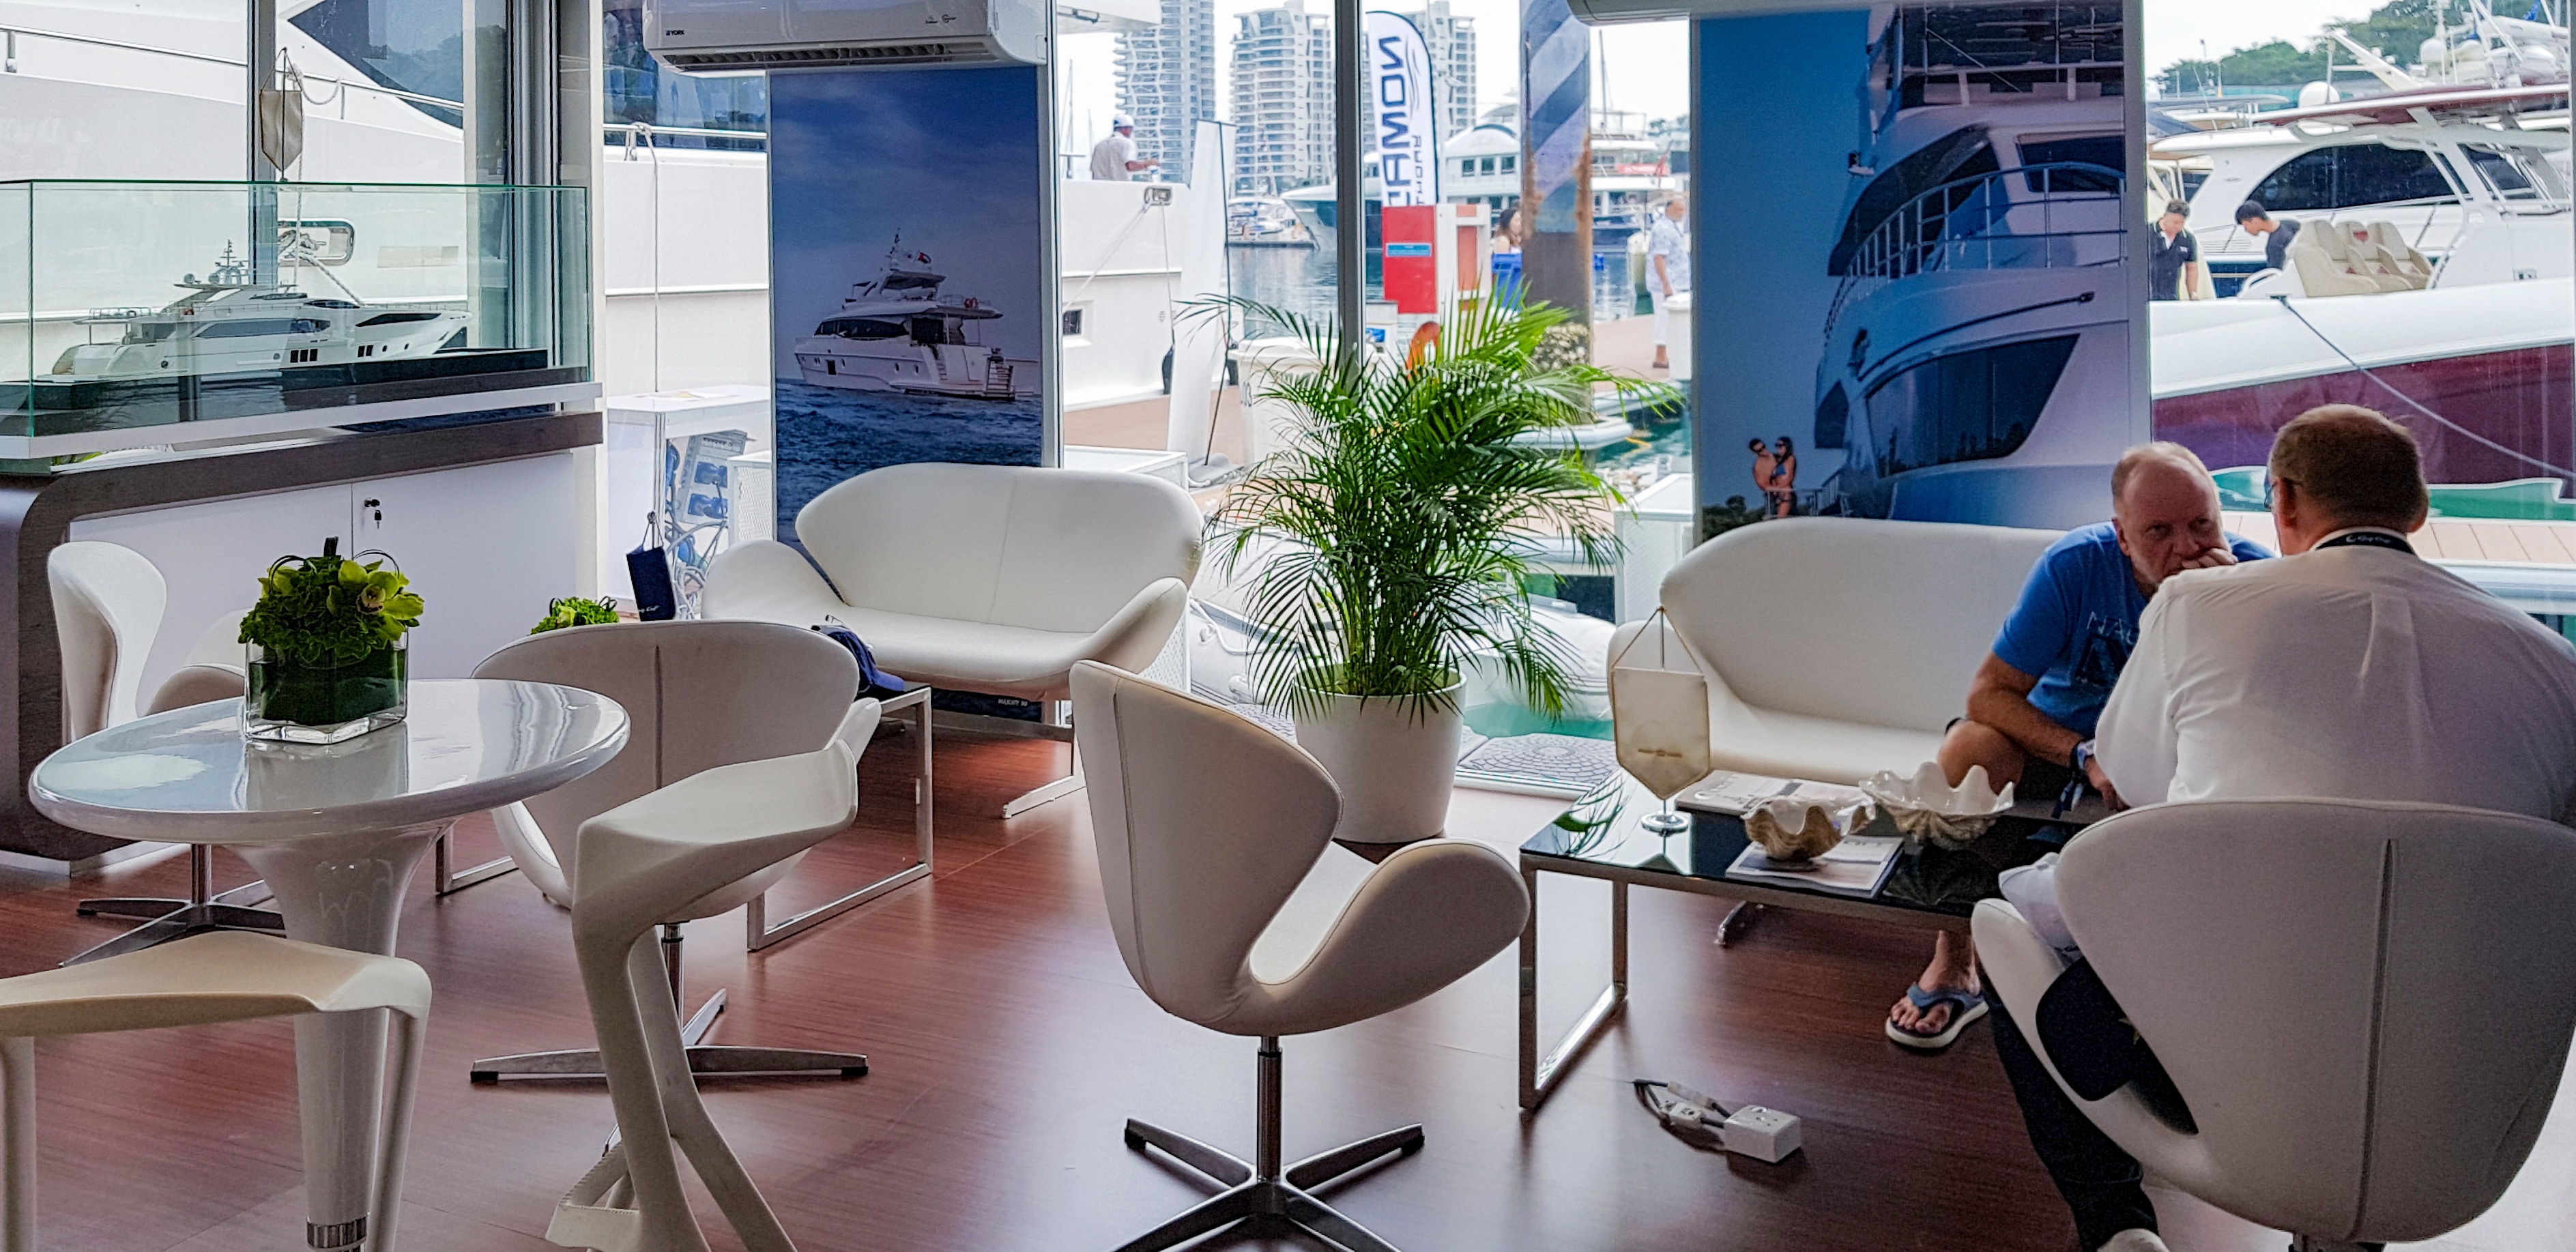 Gulf Craft at Singapore Yacht Show 2018 Day 3 (4).jpg